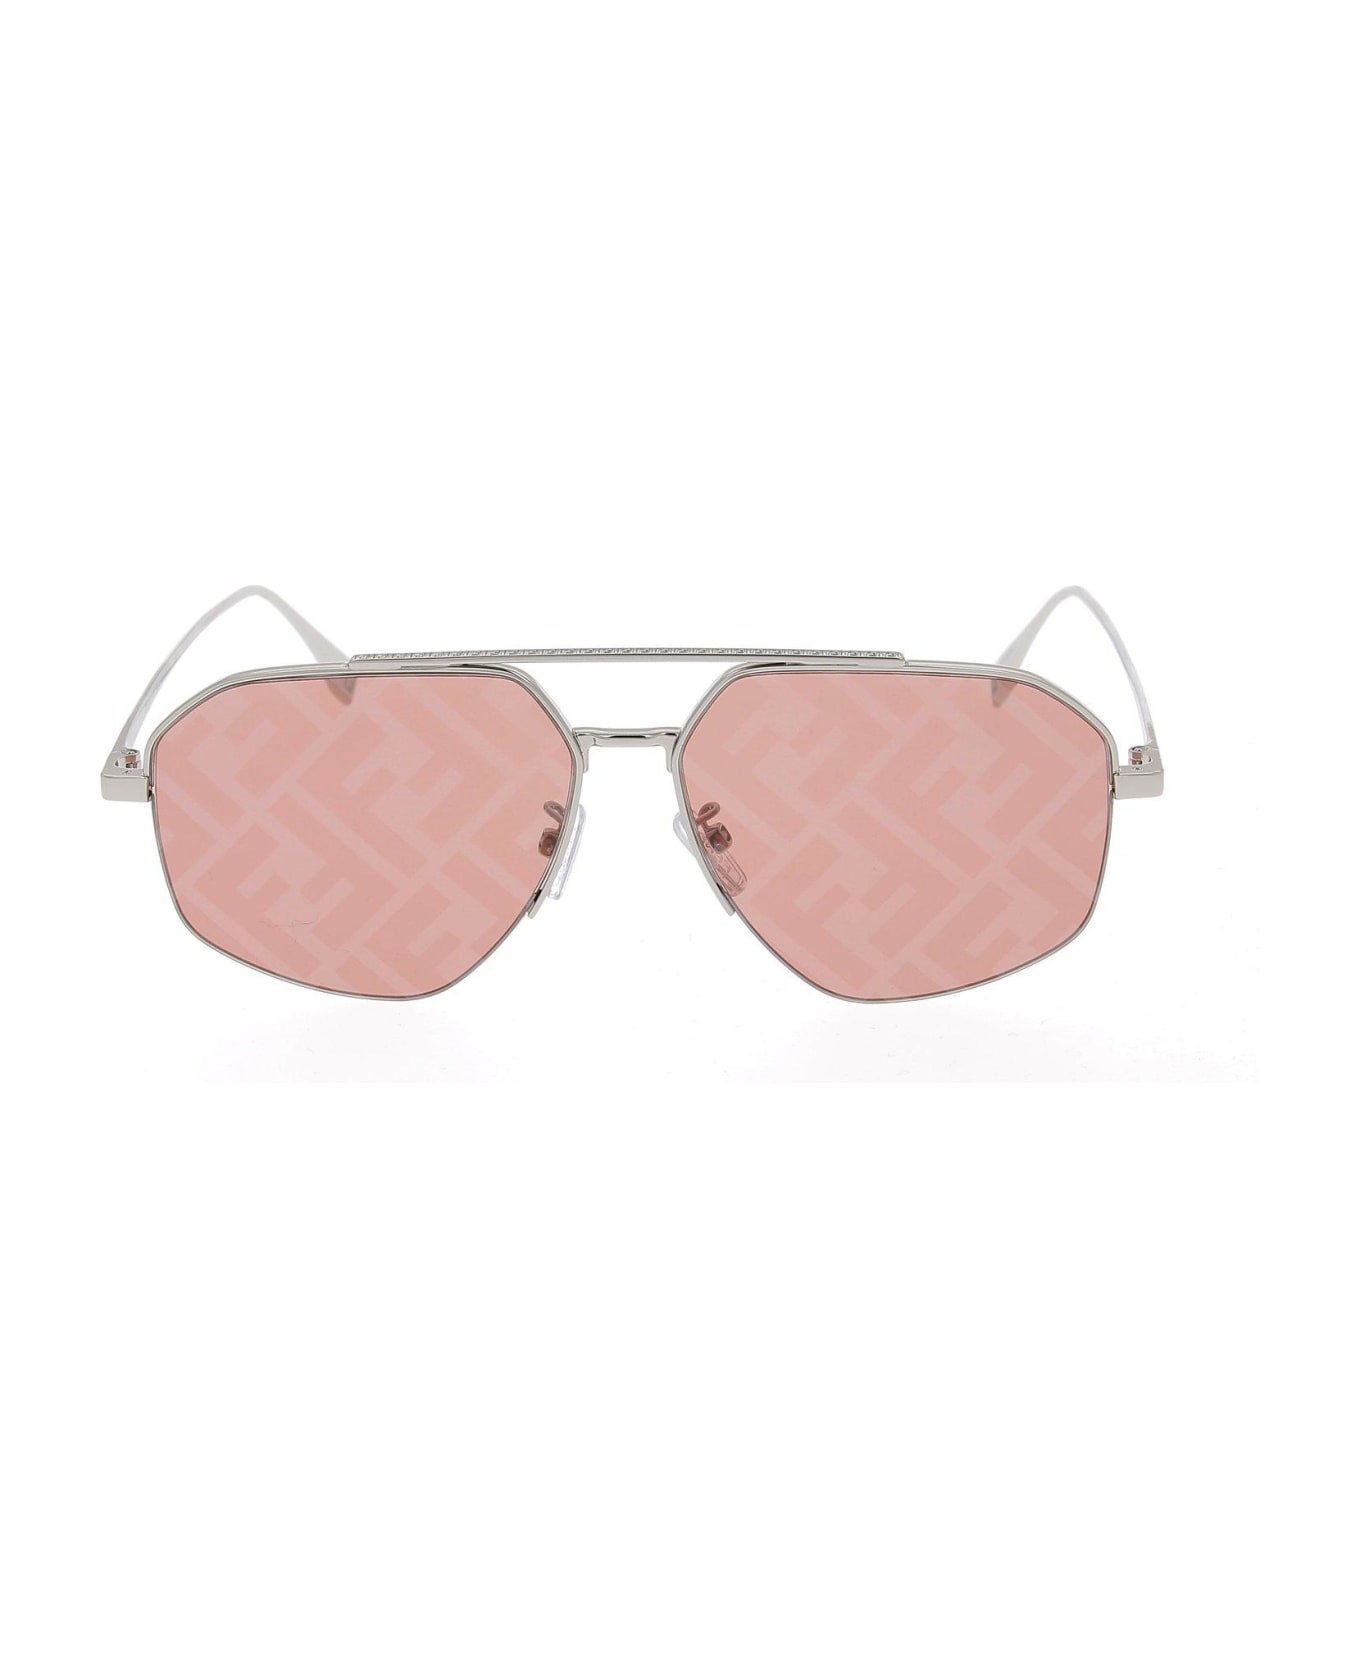 Fendi Eyewear Pilot Frame Sunglasses - 16u